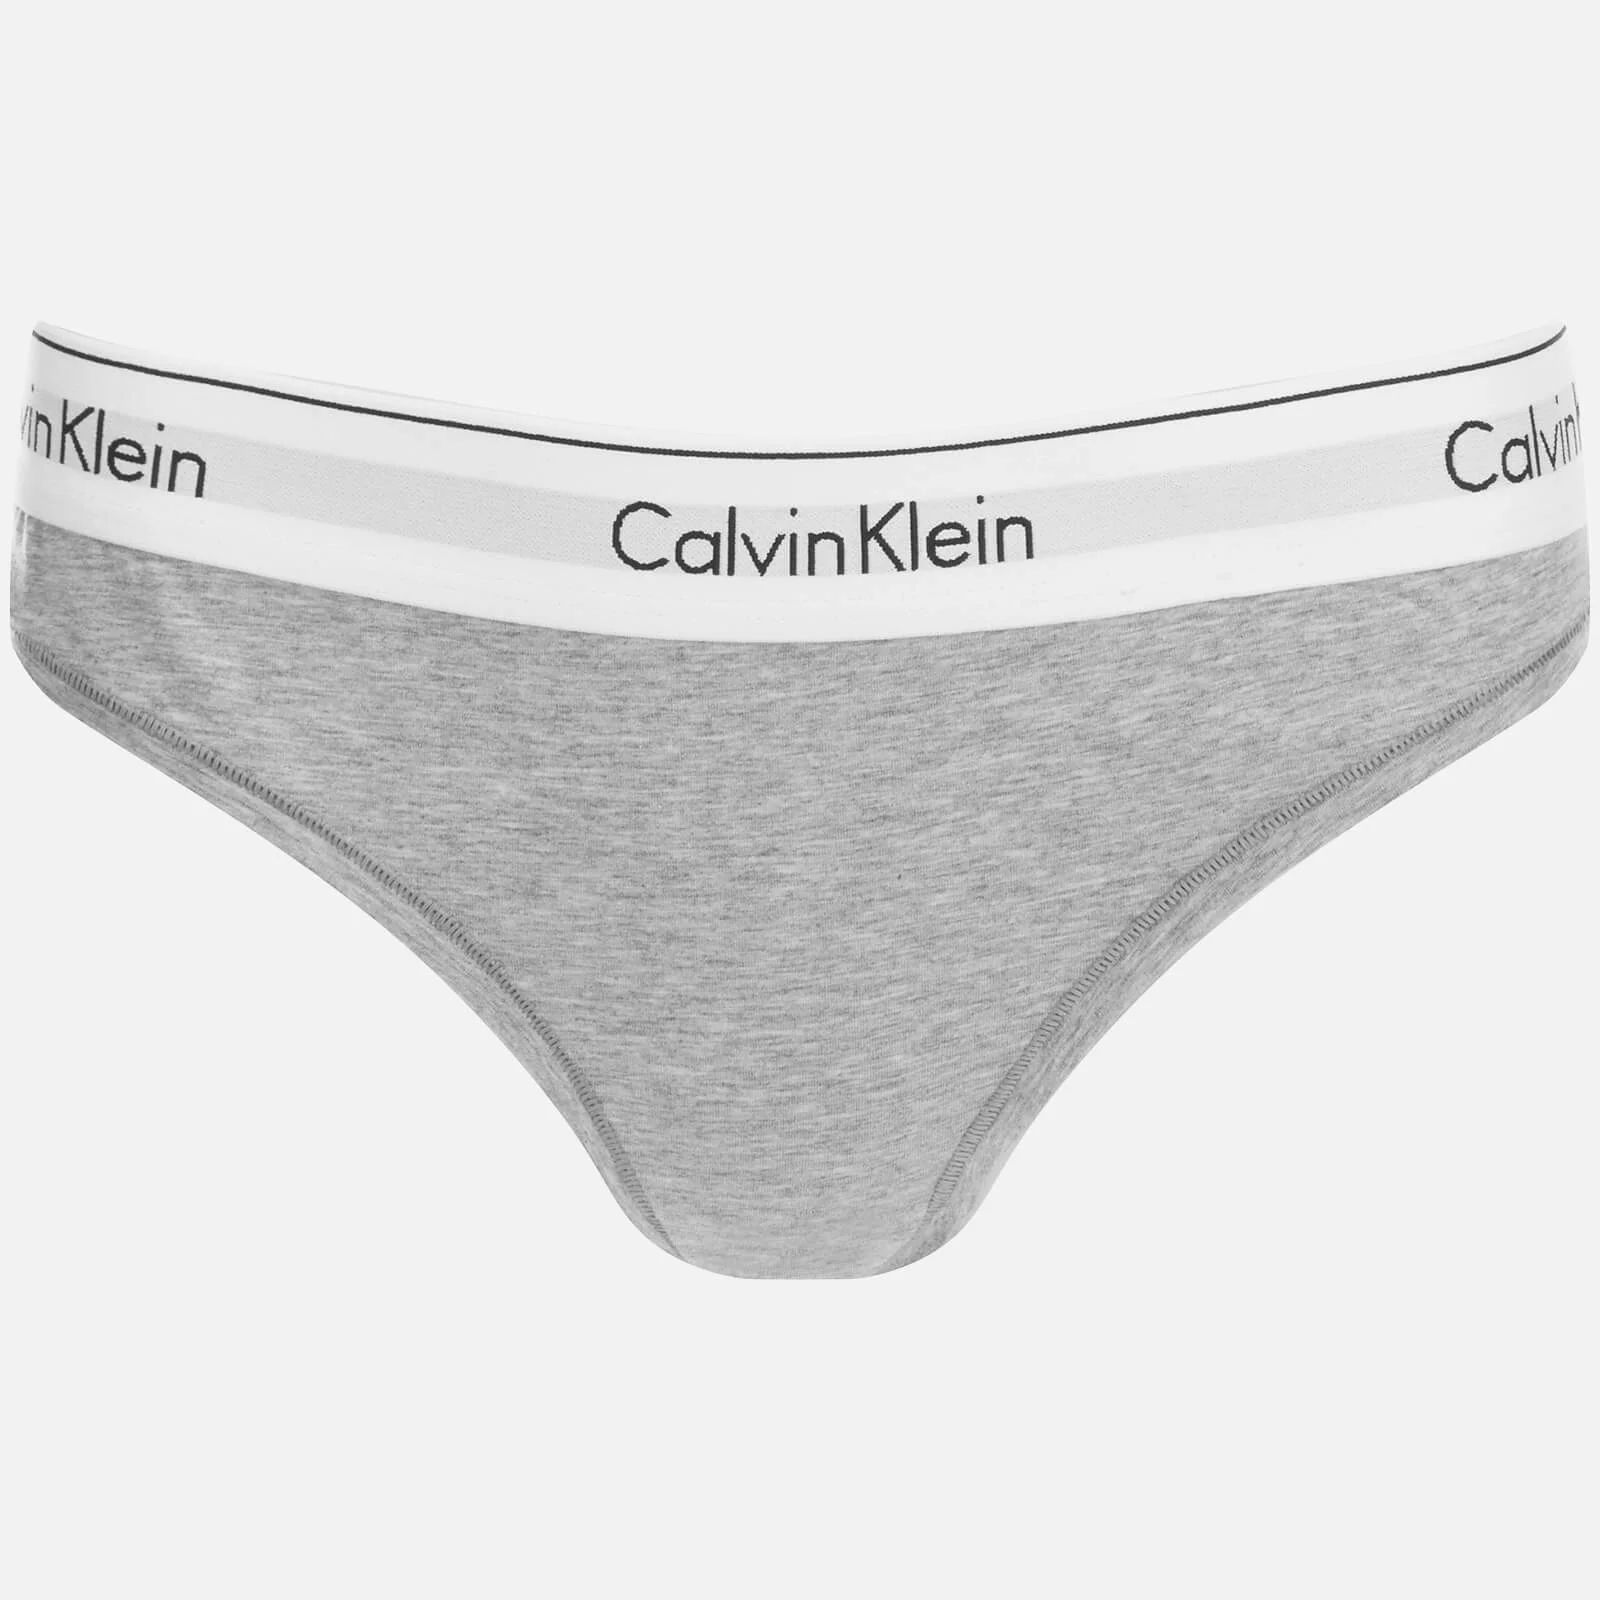 Calvin Klein Women's Modern Cotton Thong - Grey Heather Image 1